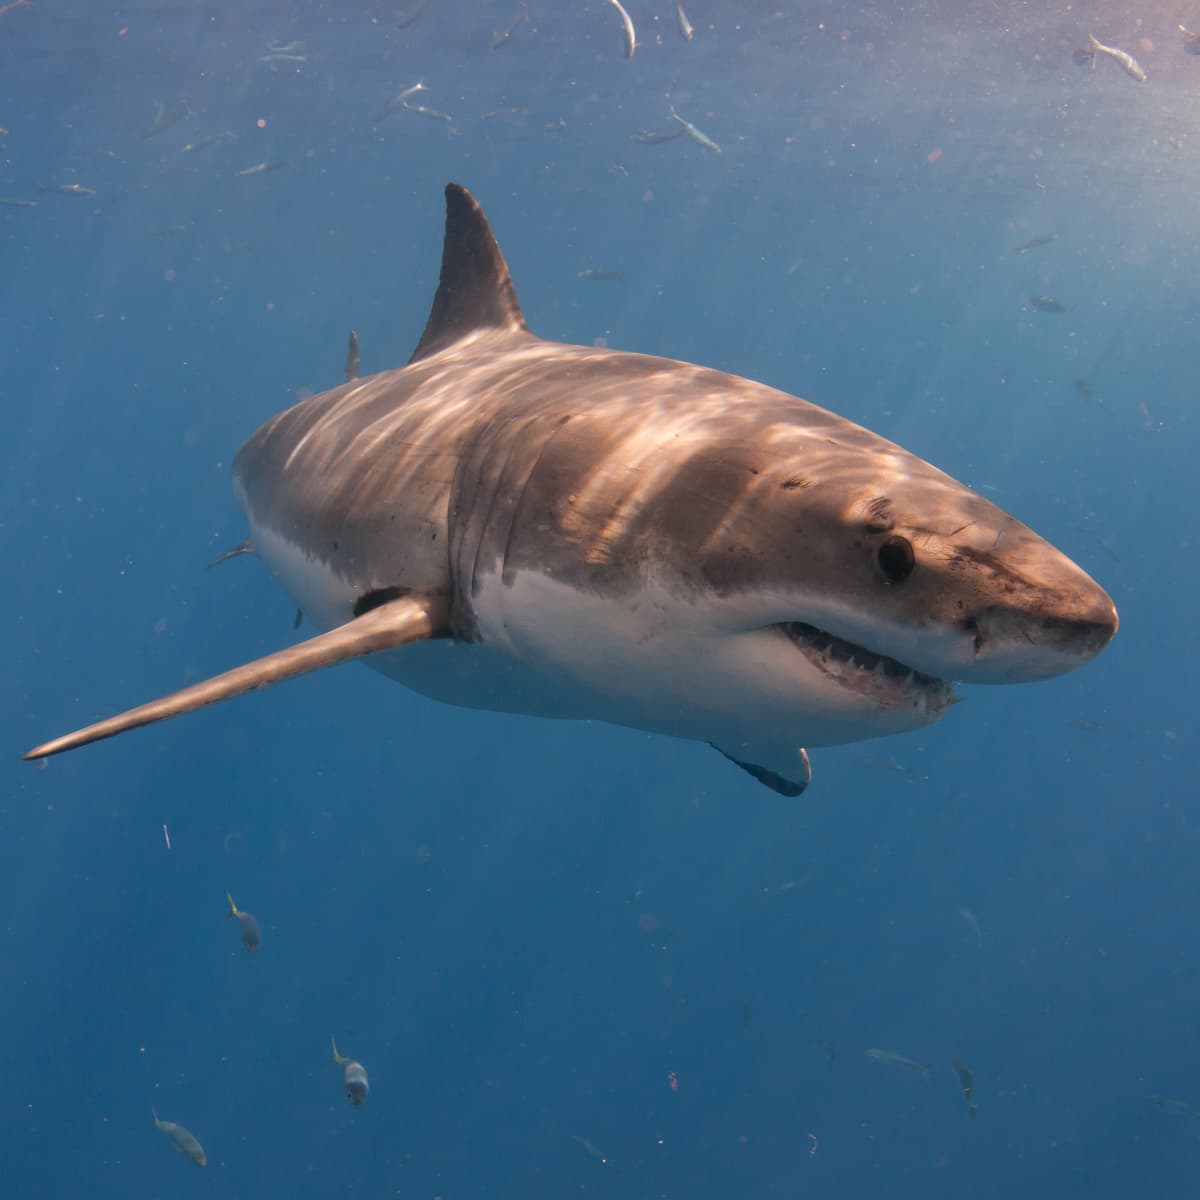 Great white shark pinged off Jersey shore coast 